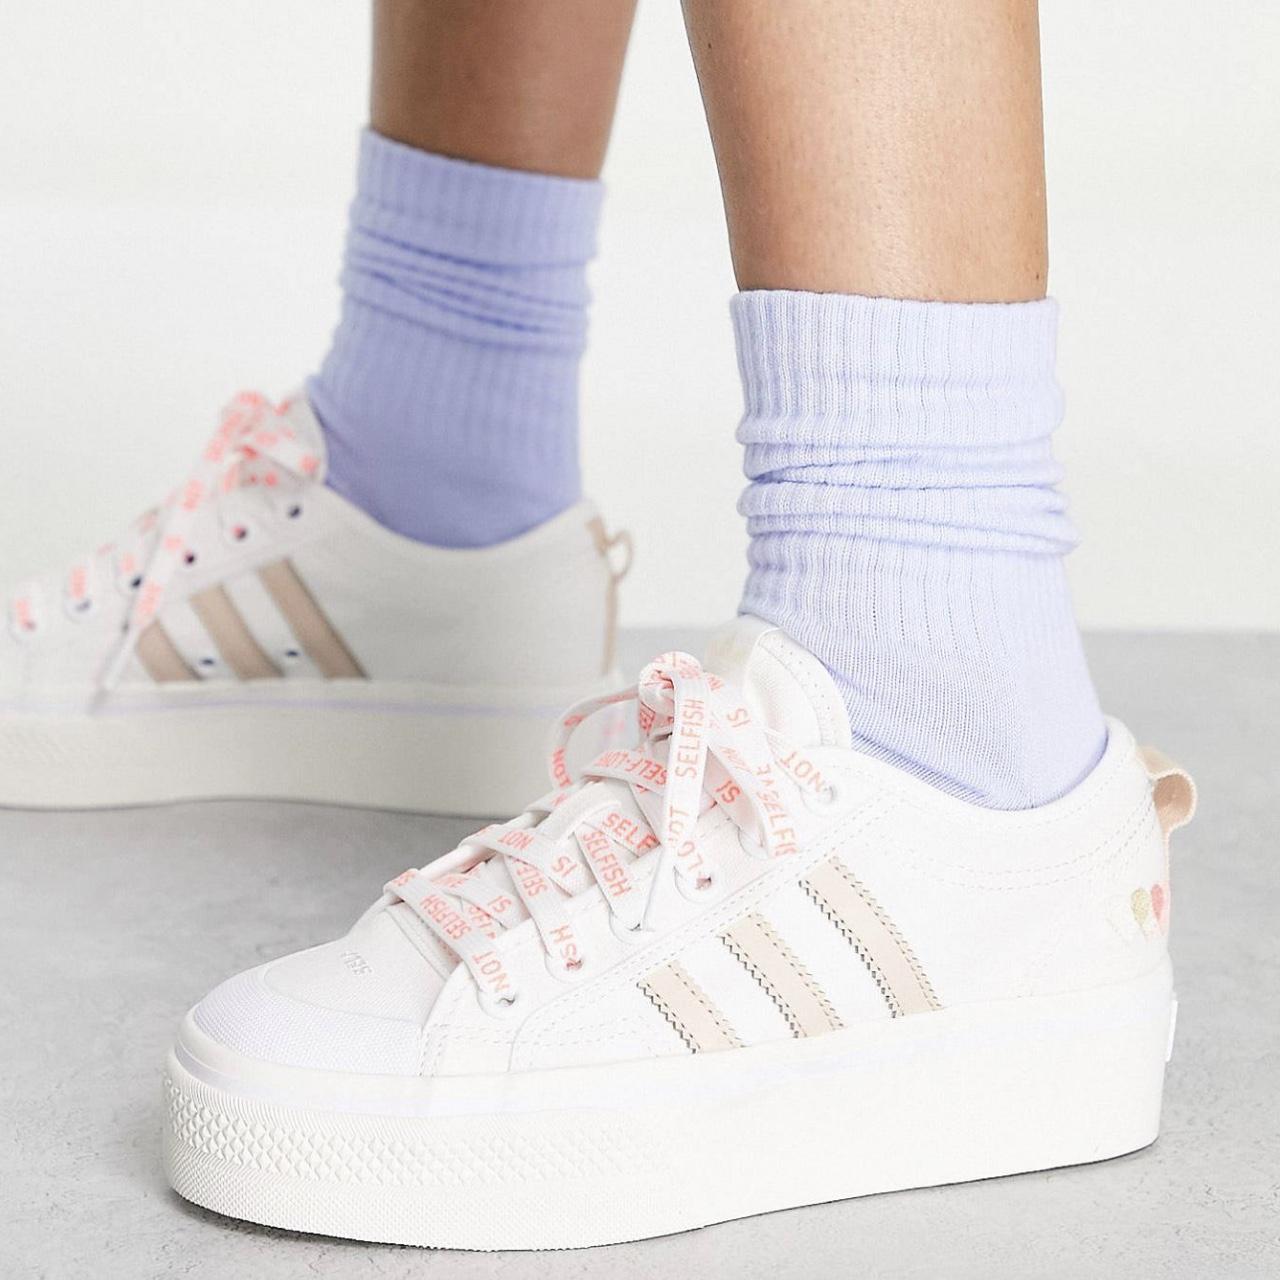 Adidas Originals Women's White and Pink Trainers | Depop